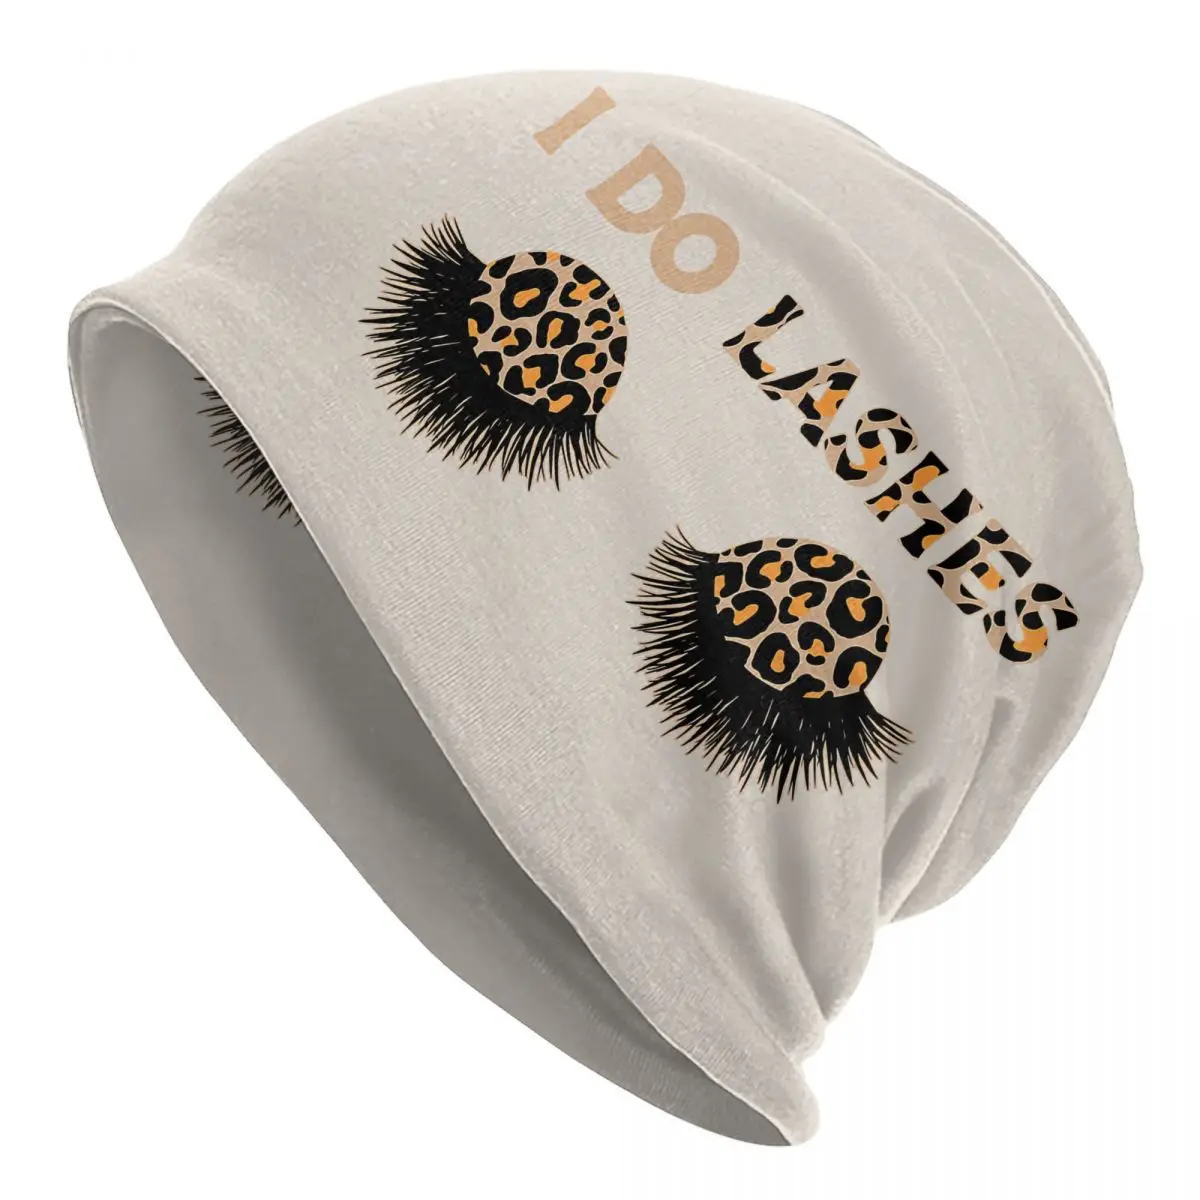 Eyelash Decorative Adult Men's Women's Knit Hat Keep warm winter Funny knitted hat